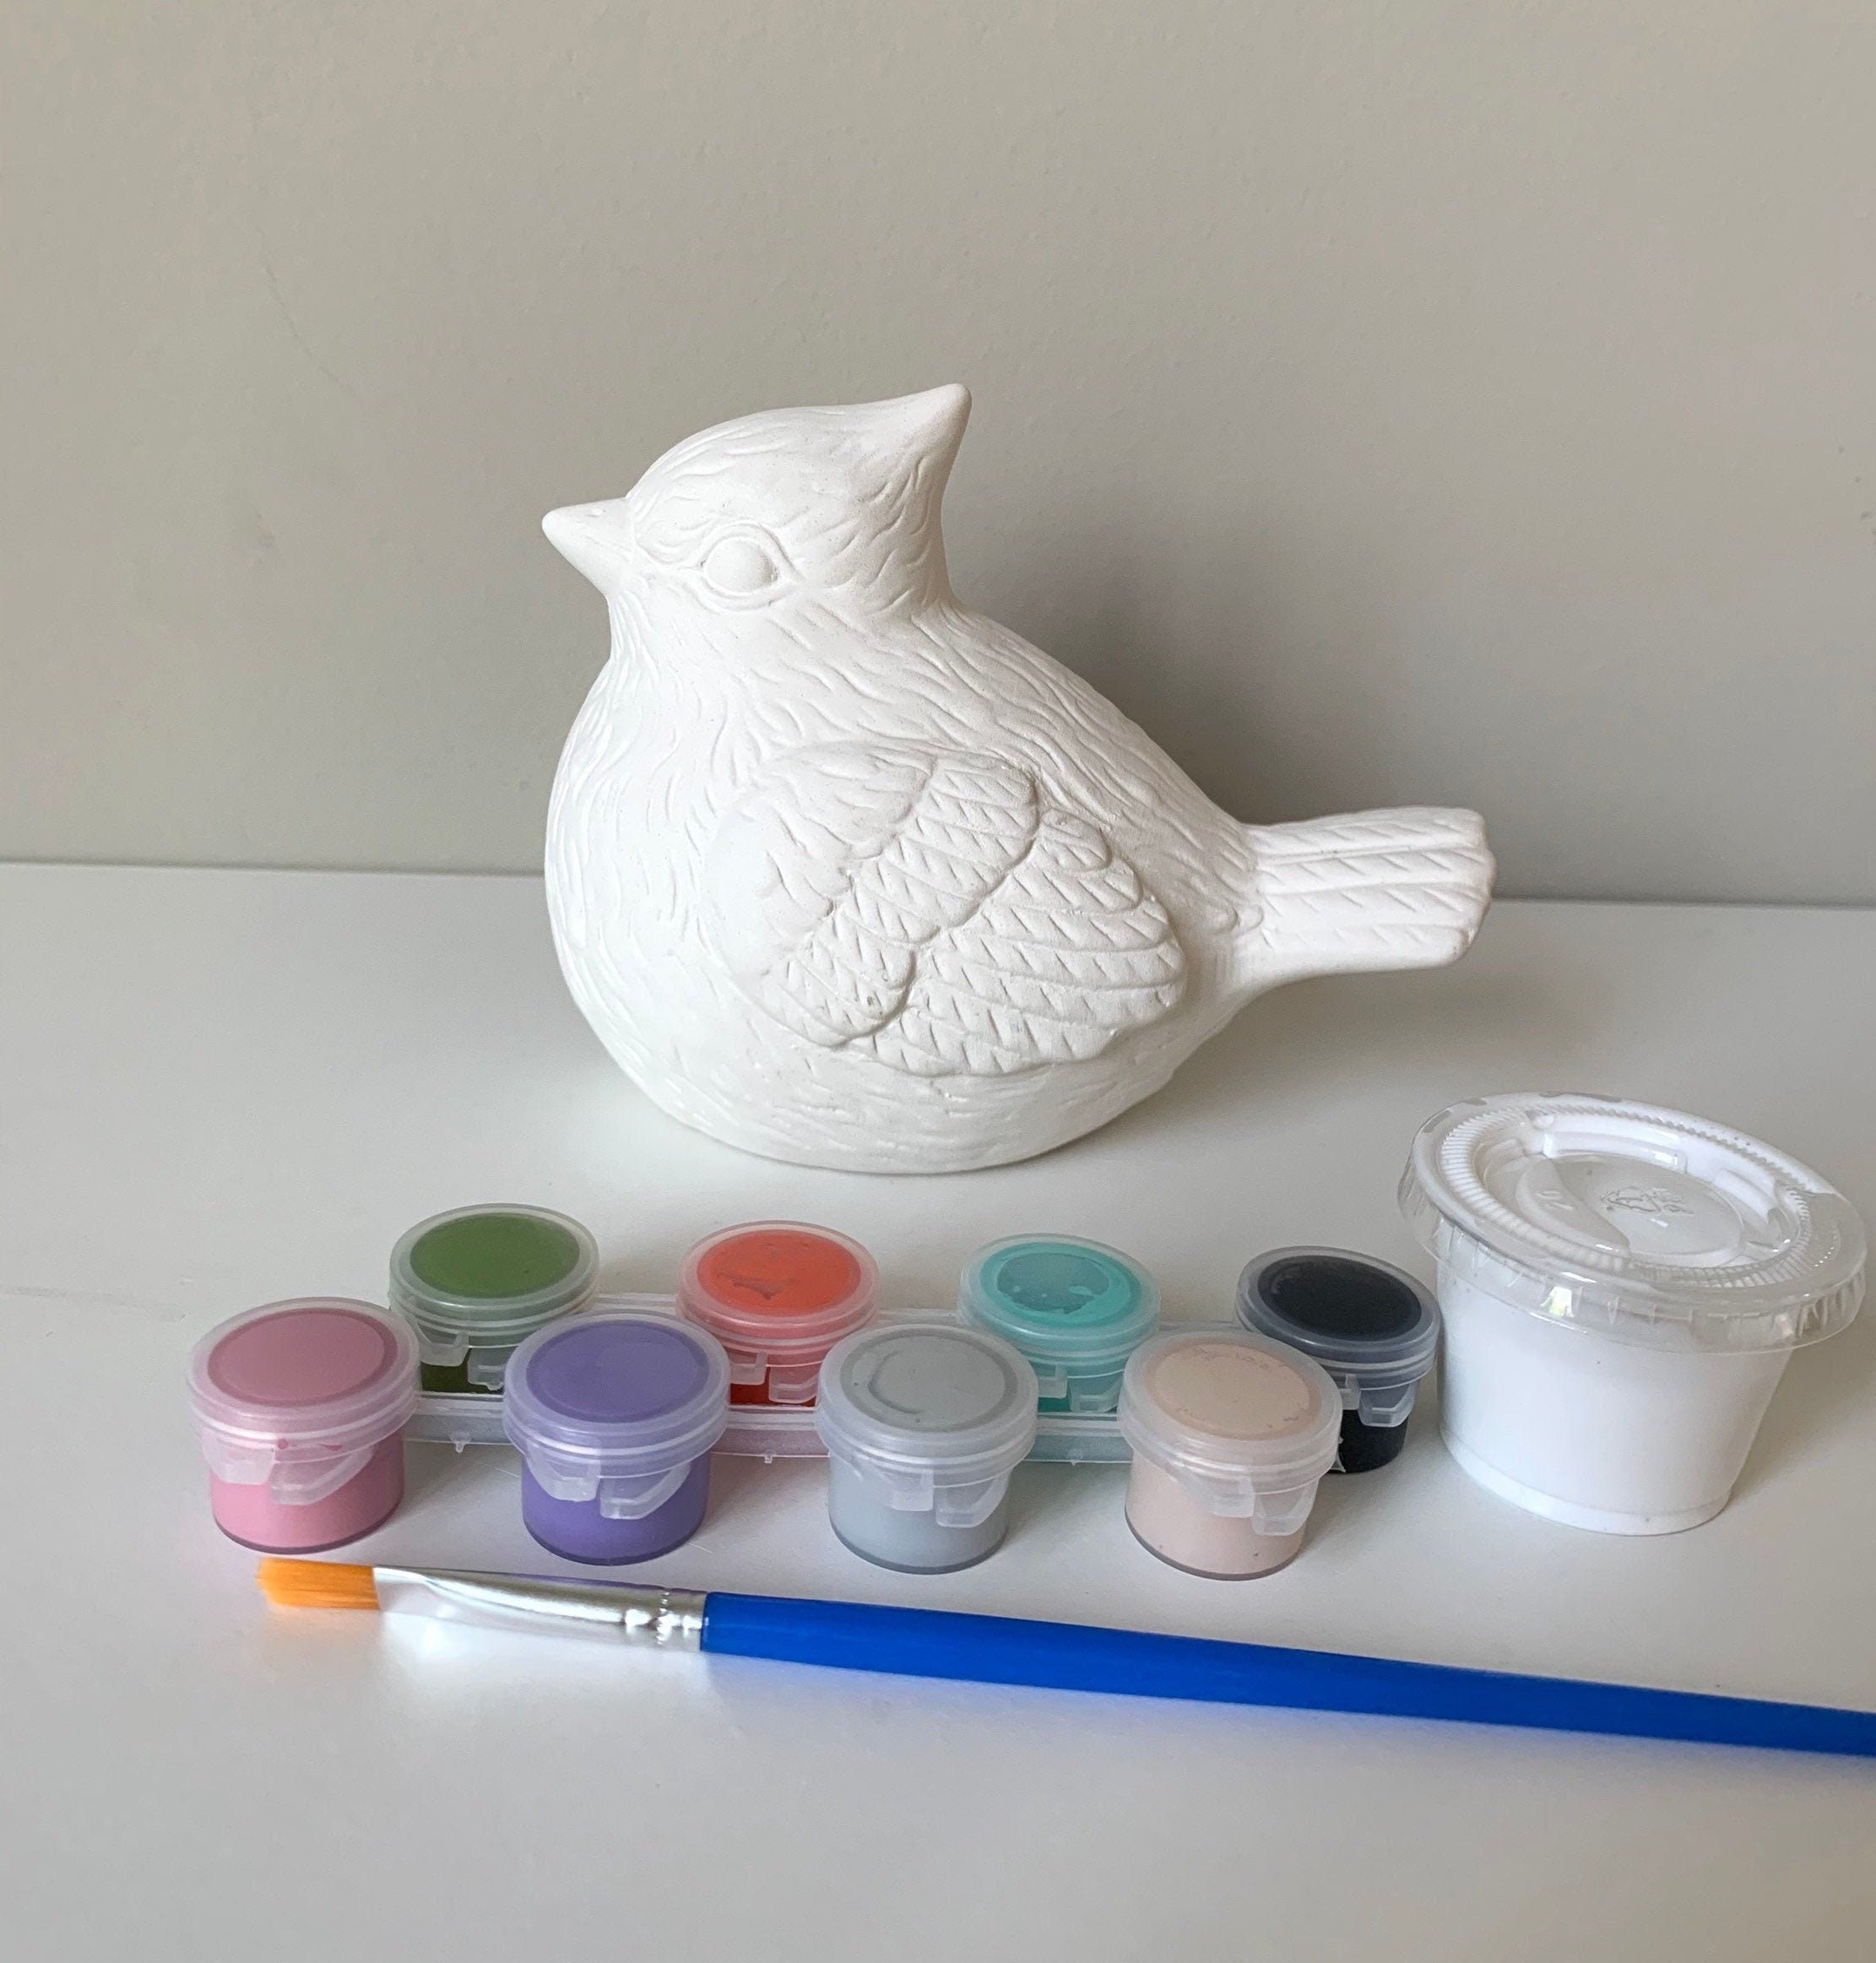 Kits de pintura de cerámica cardinal, kits de arte, kit de pintura para  pájaros, suministros de arte y artesanía, pintura de cerámica en el hogar, pintura  de cerámica de bricolaje 